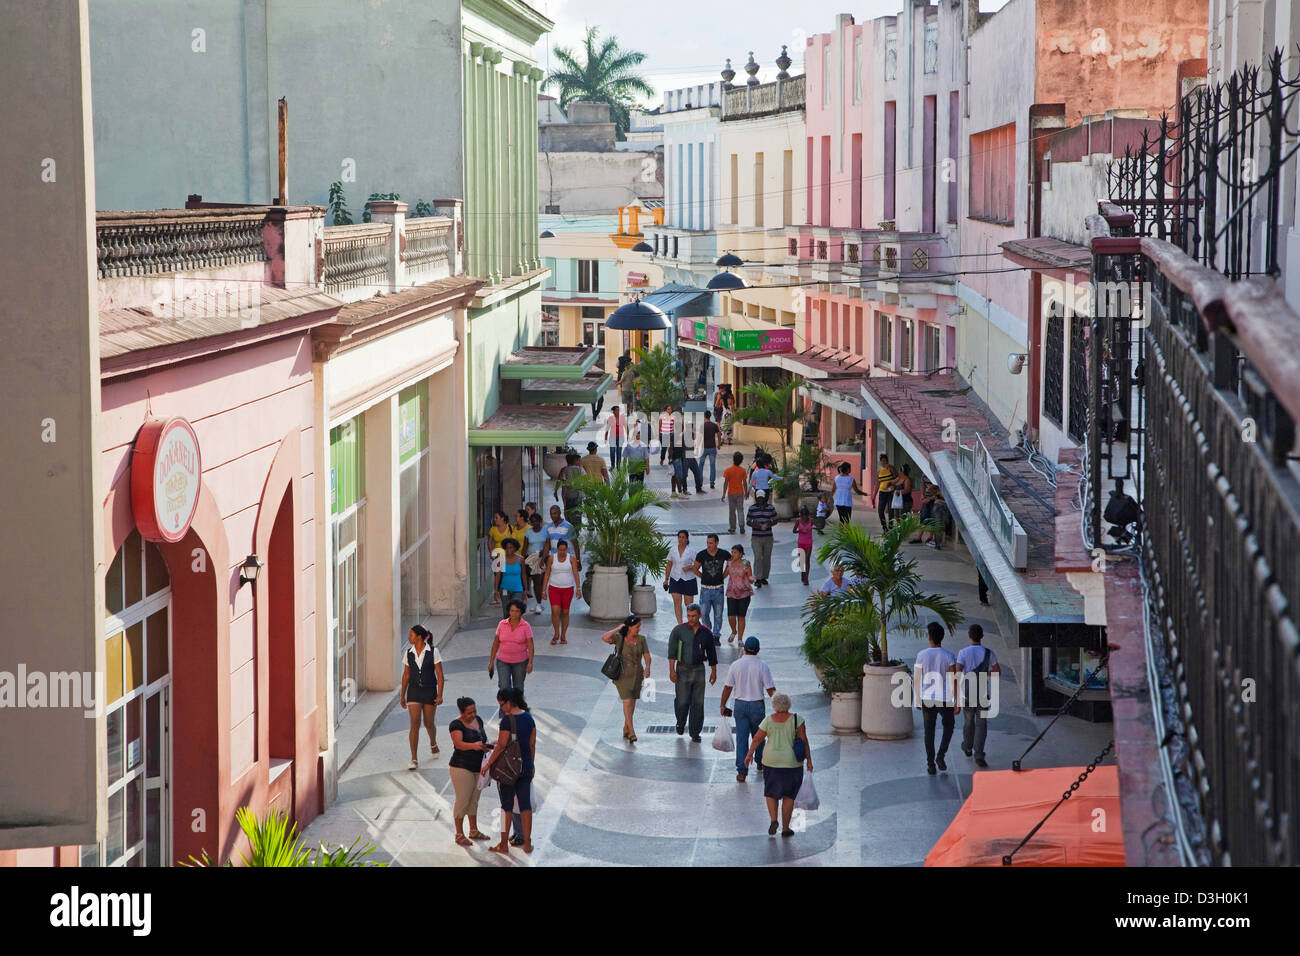 Shopping street in the city Camagüey, Cuba, Caribbean Stock Photo